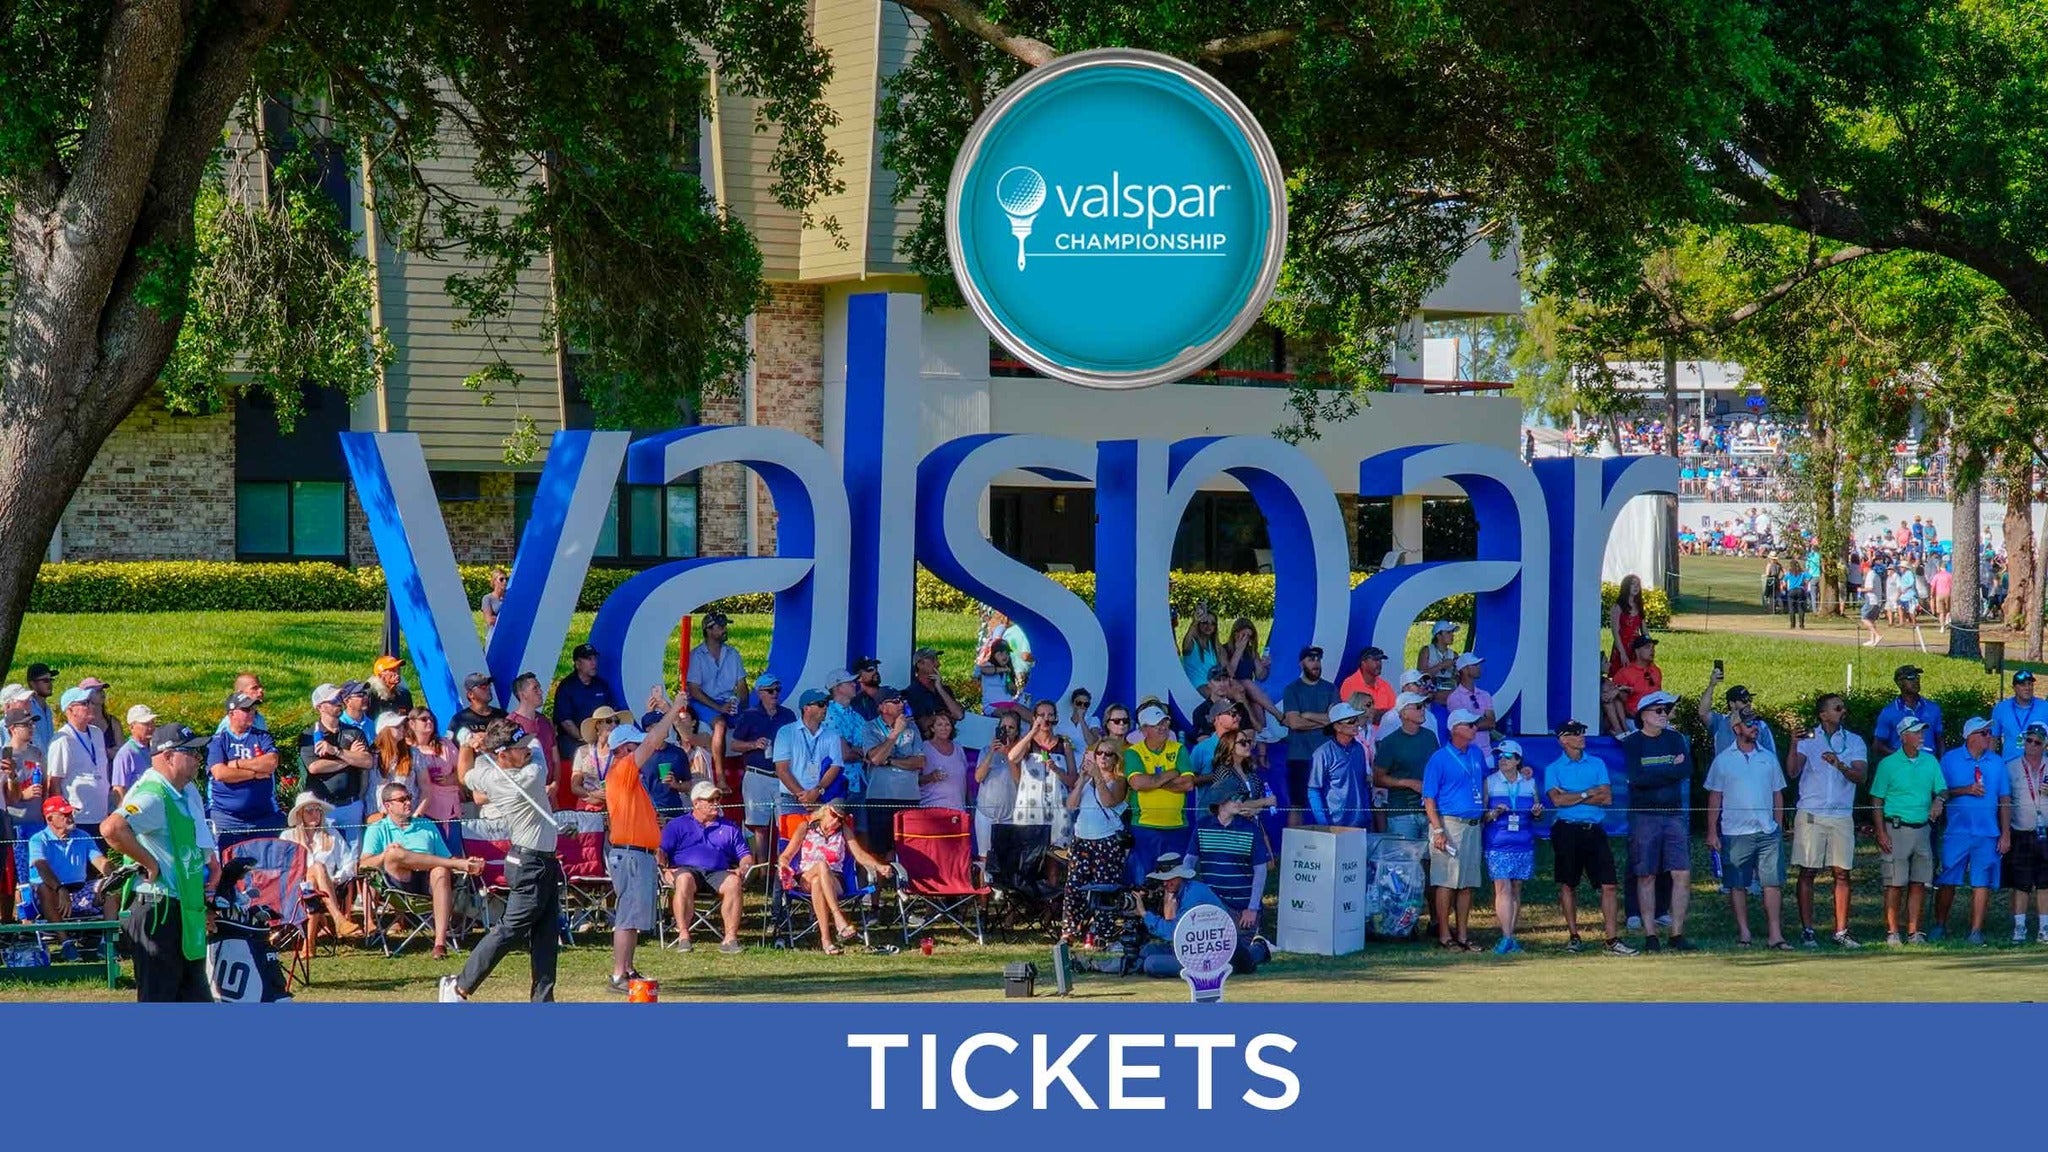 Valspar Championship at Innisbrook Resort and Golf Club